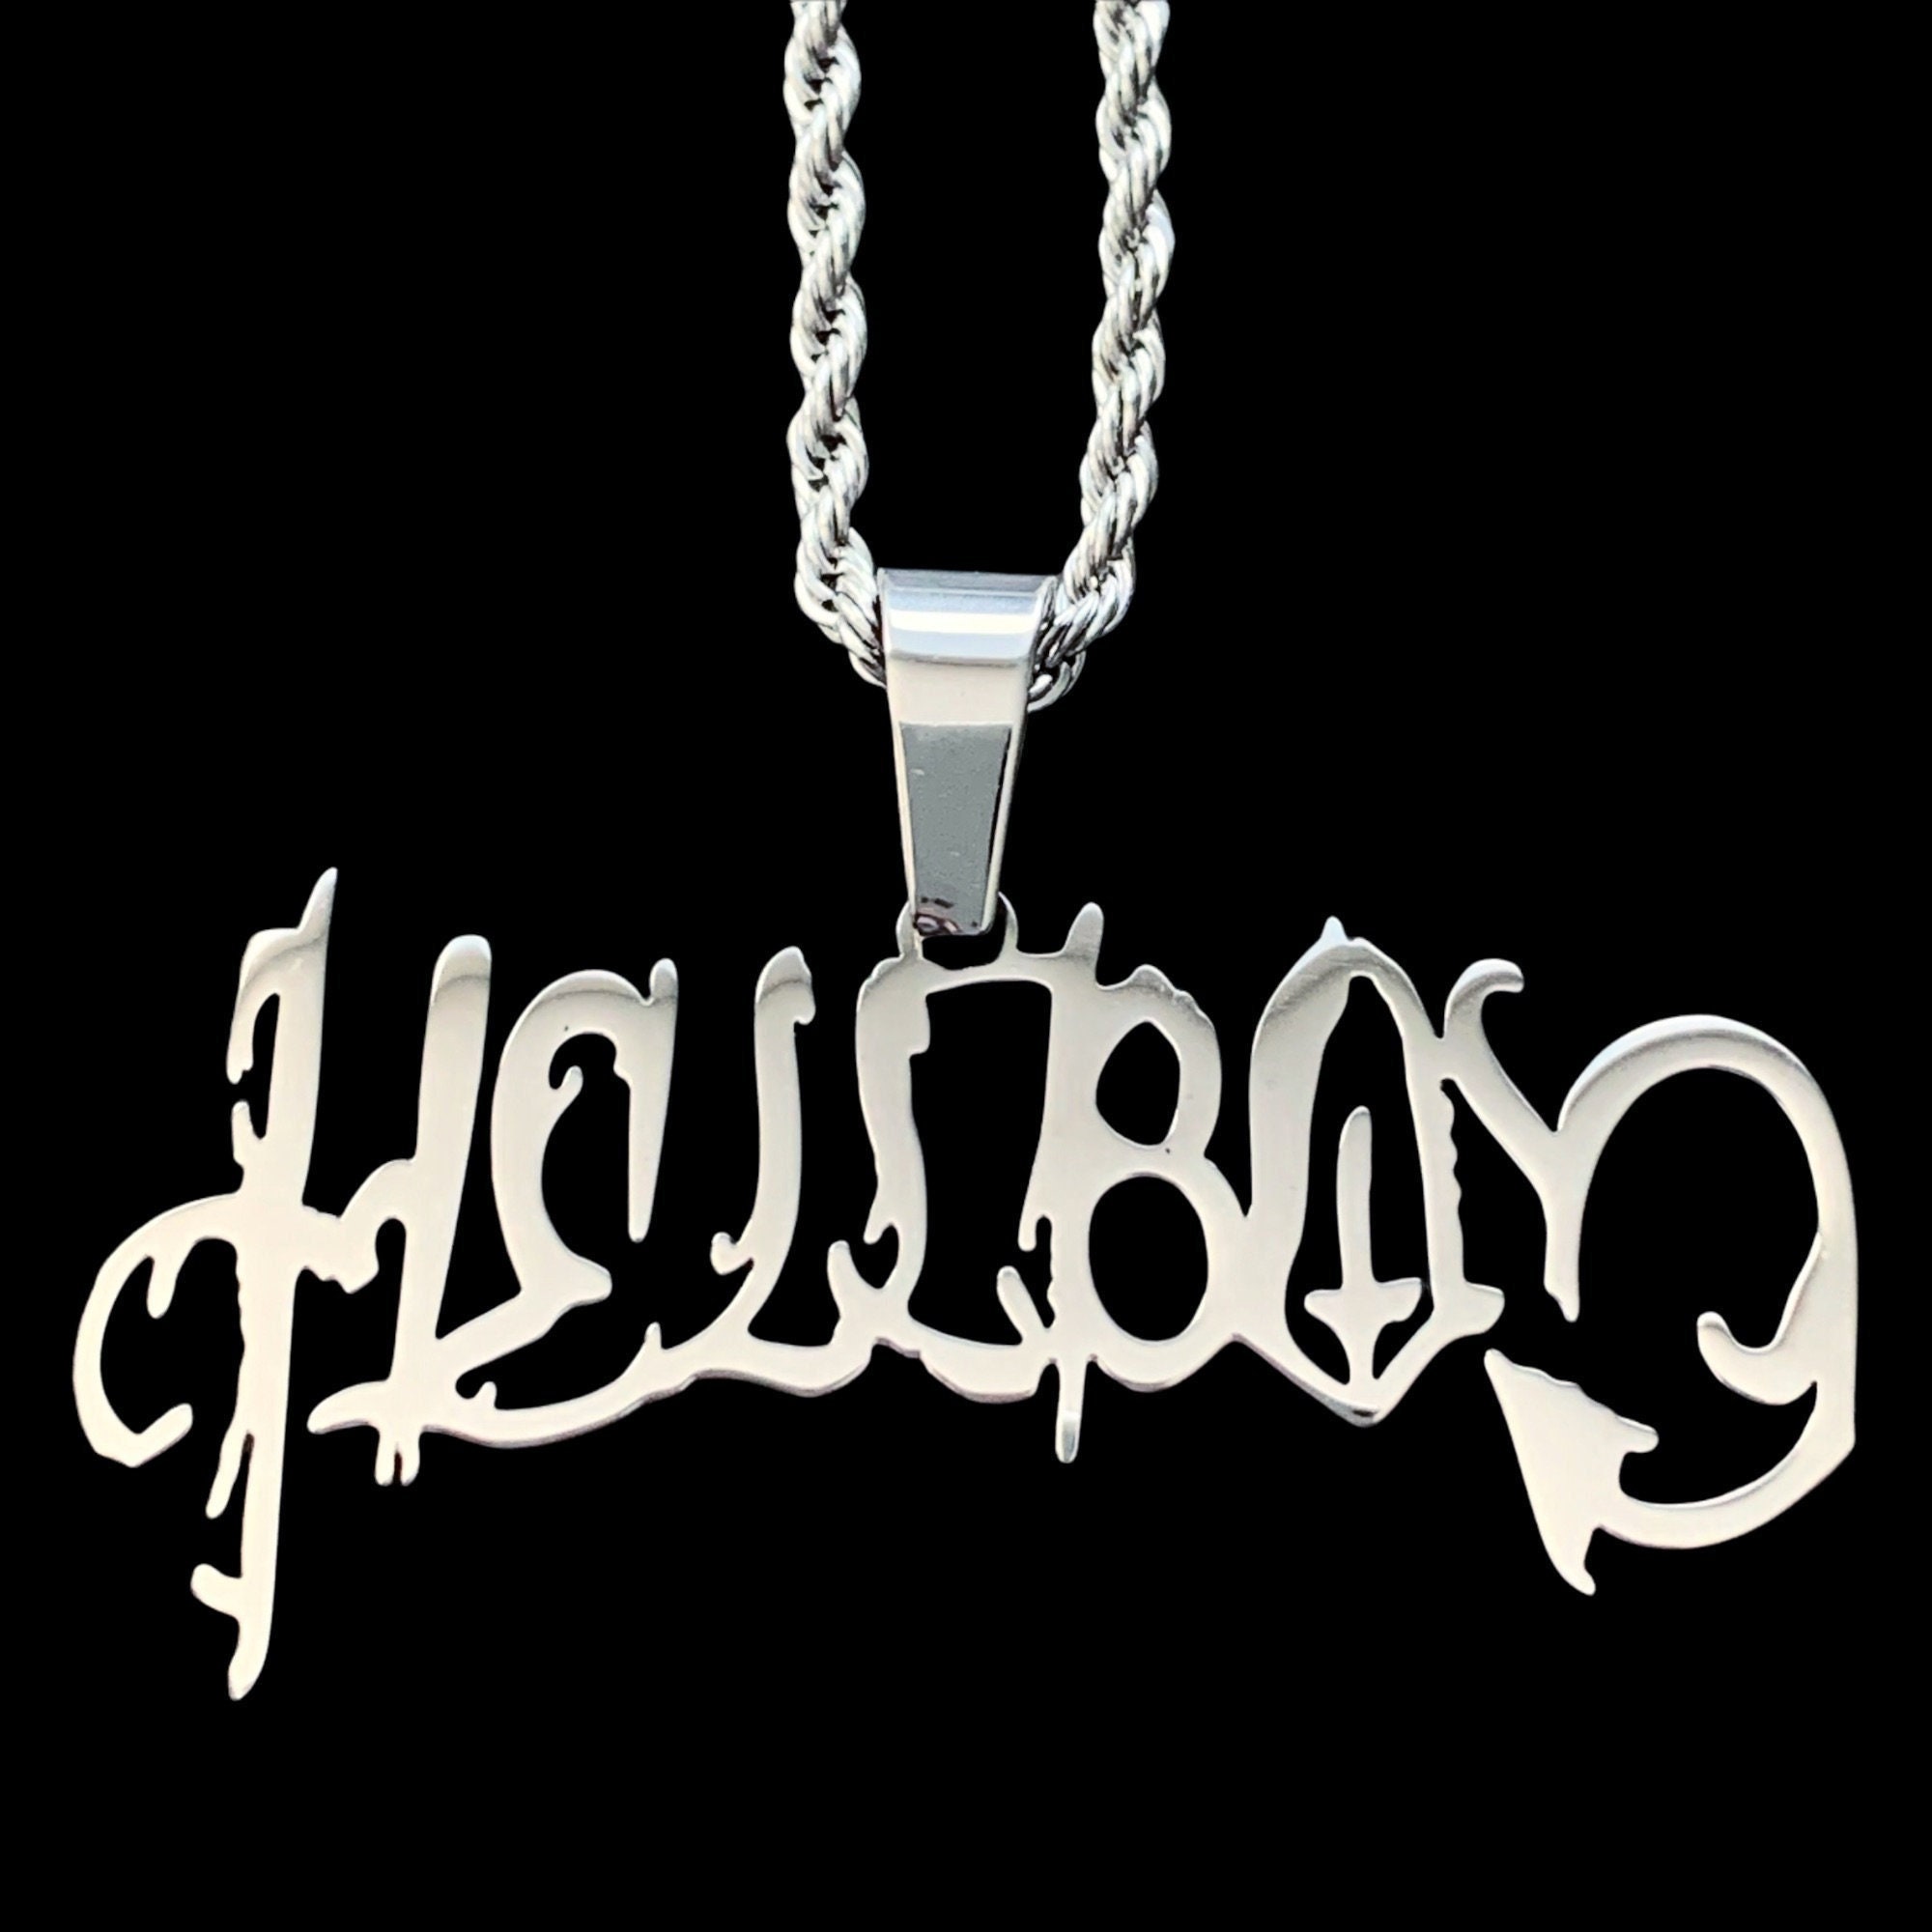 UK Lil Peep Rapper Love Rabbit Chain Necklace Pendant | eBay